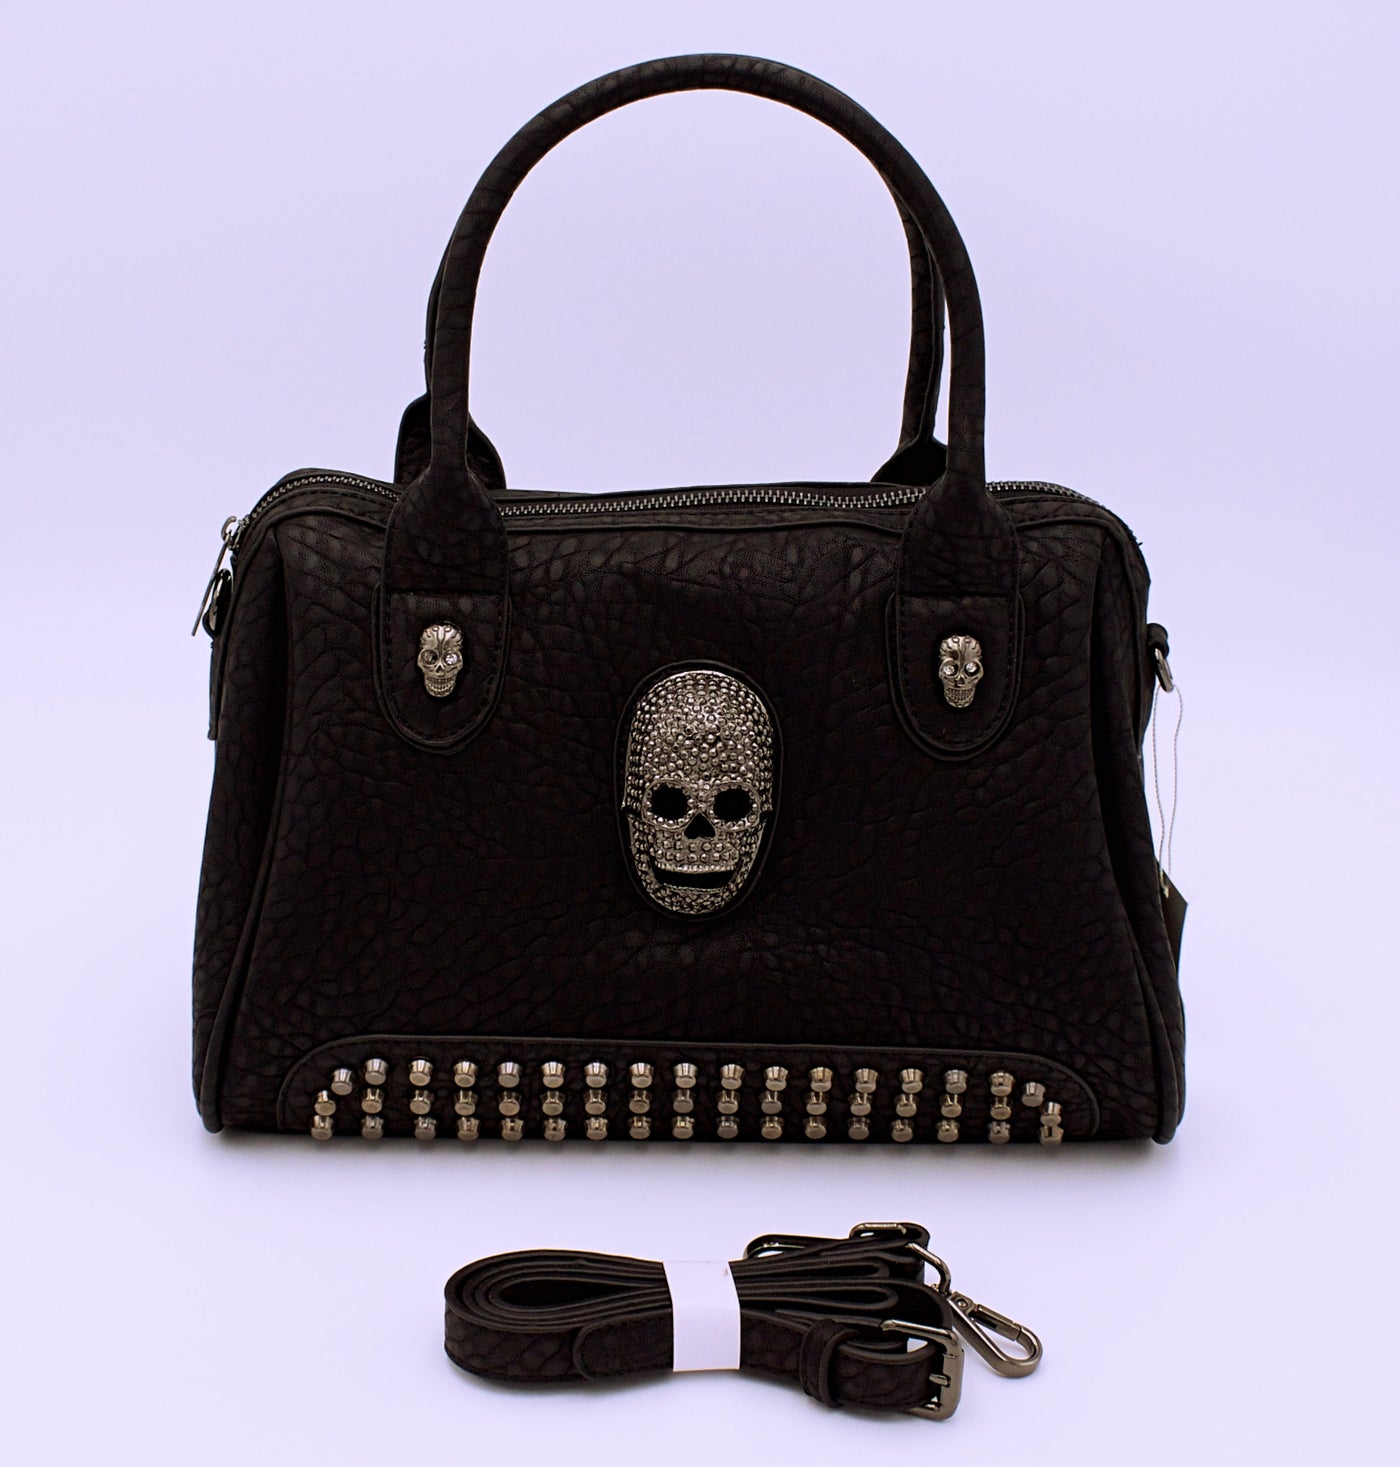 Gothic Punk Skull Handbag - The Cranio Collections